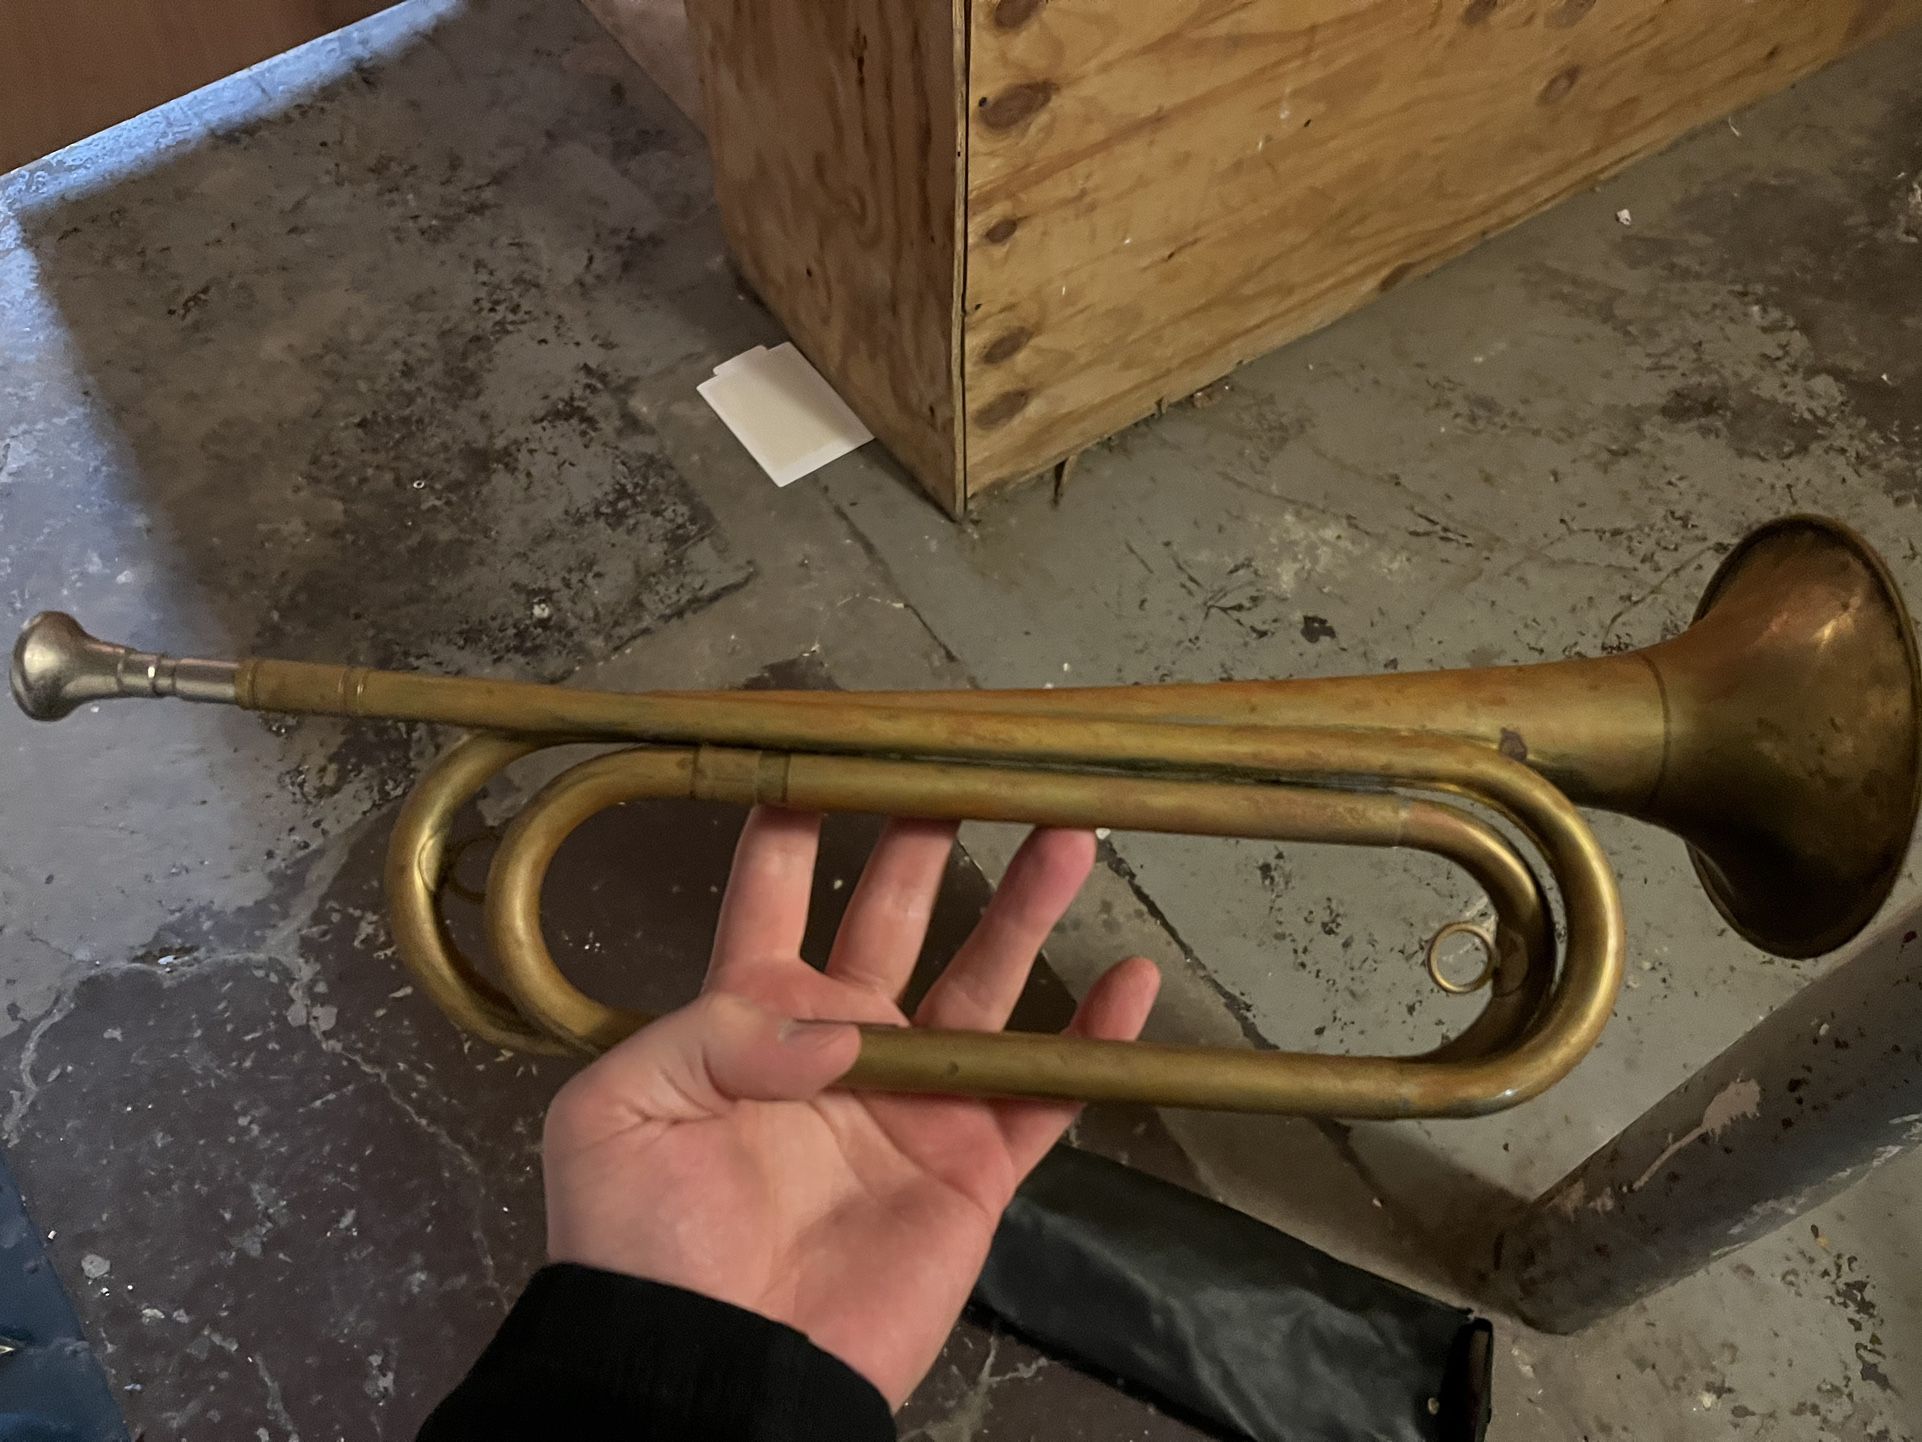 Vintage Bugle